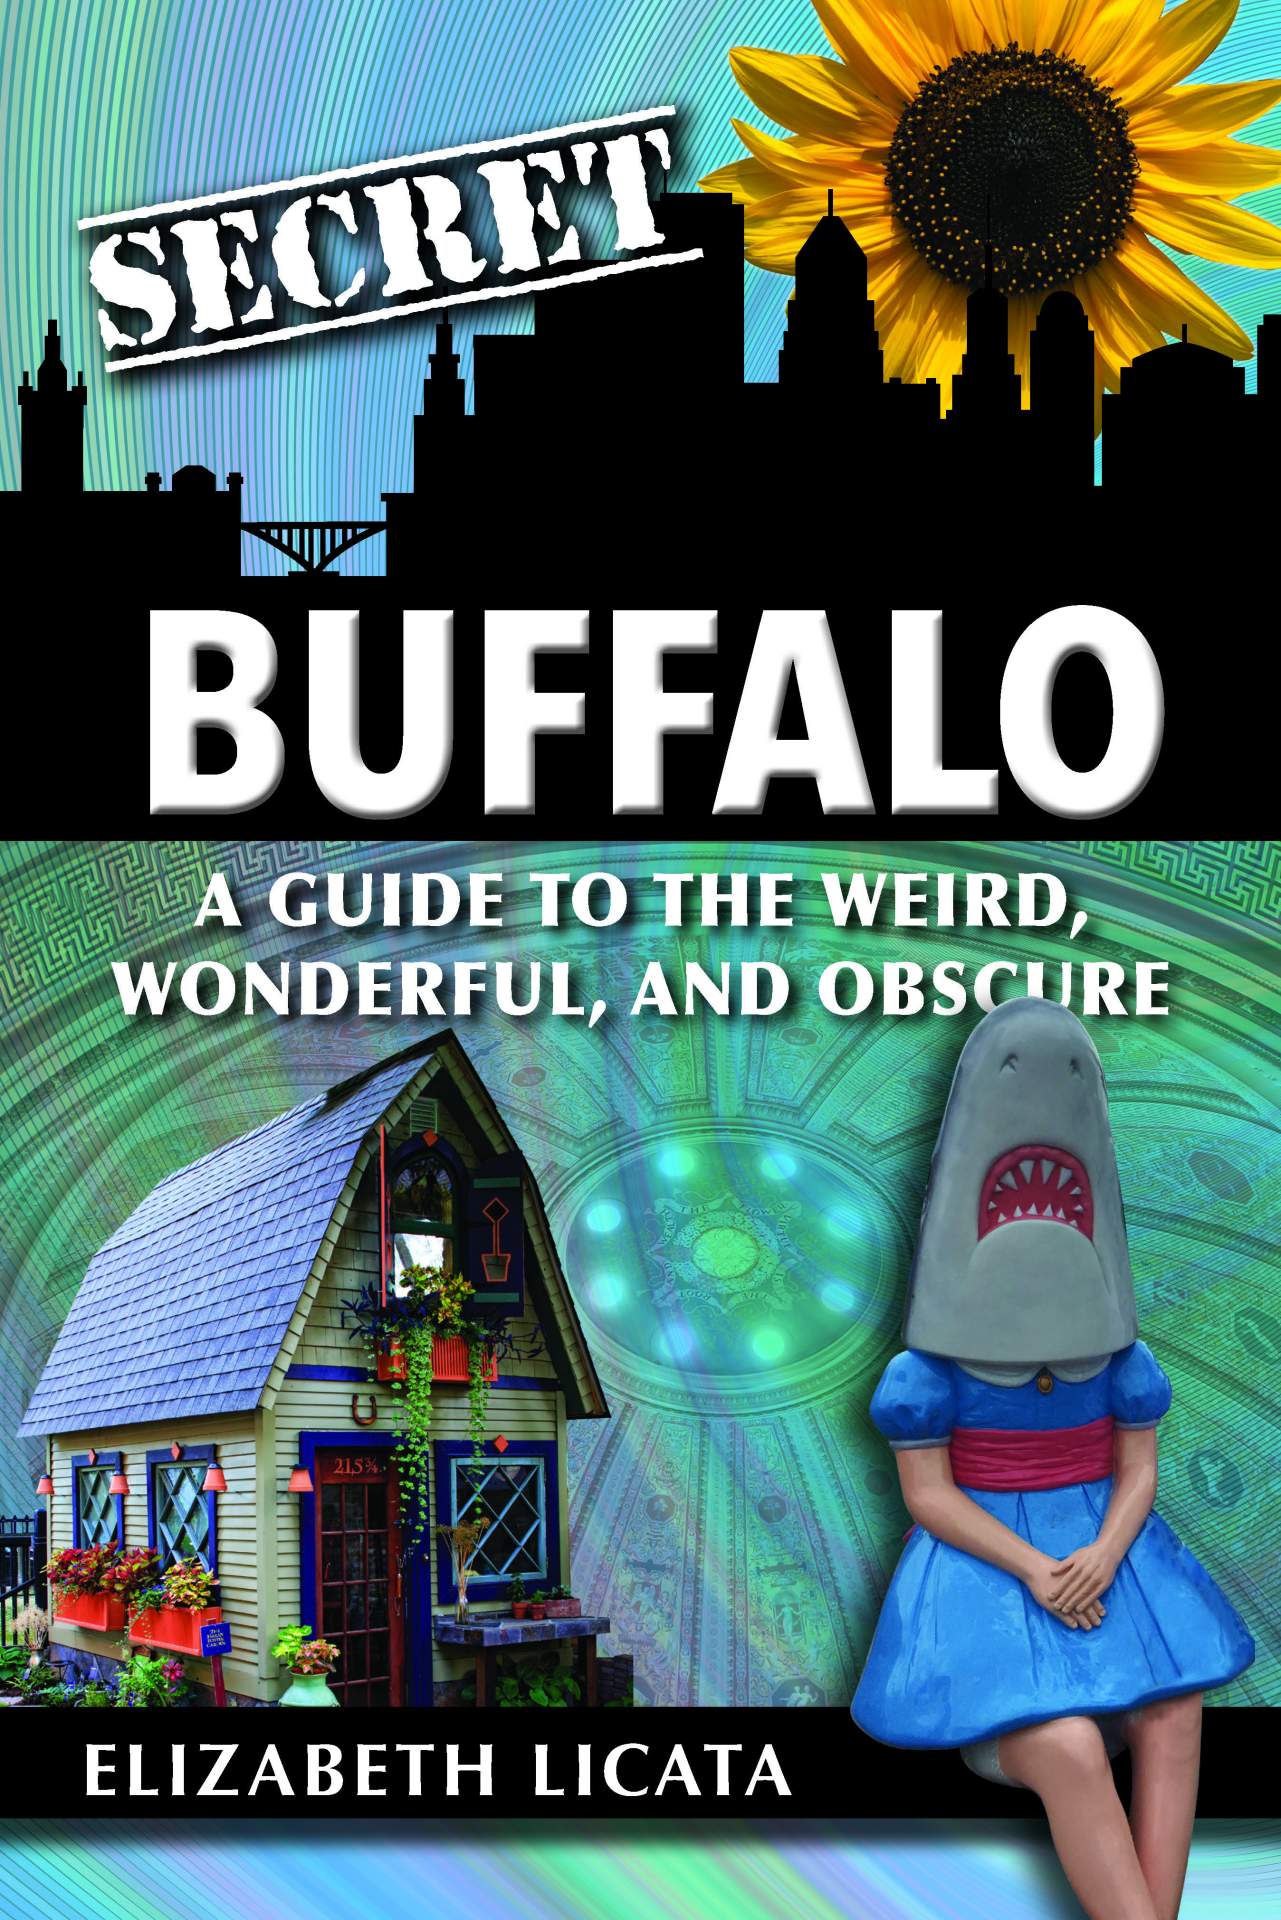 May Book Club - Secret Buffalo